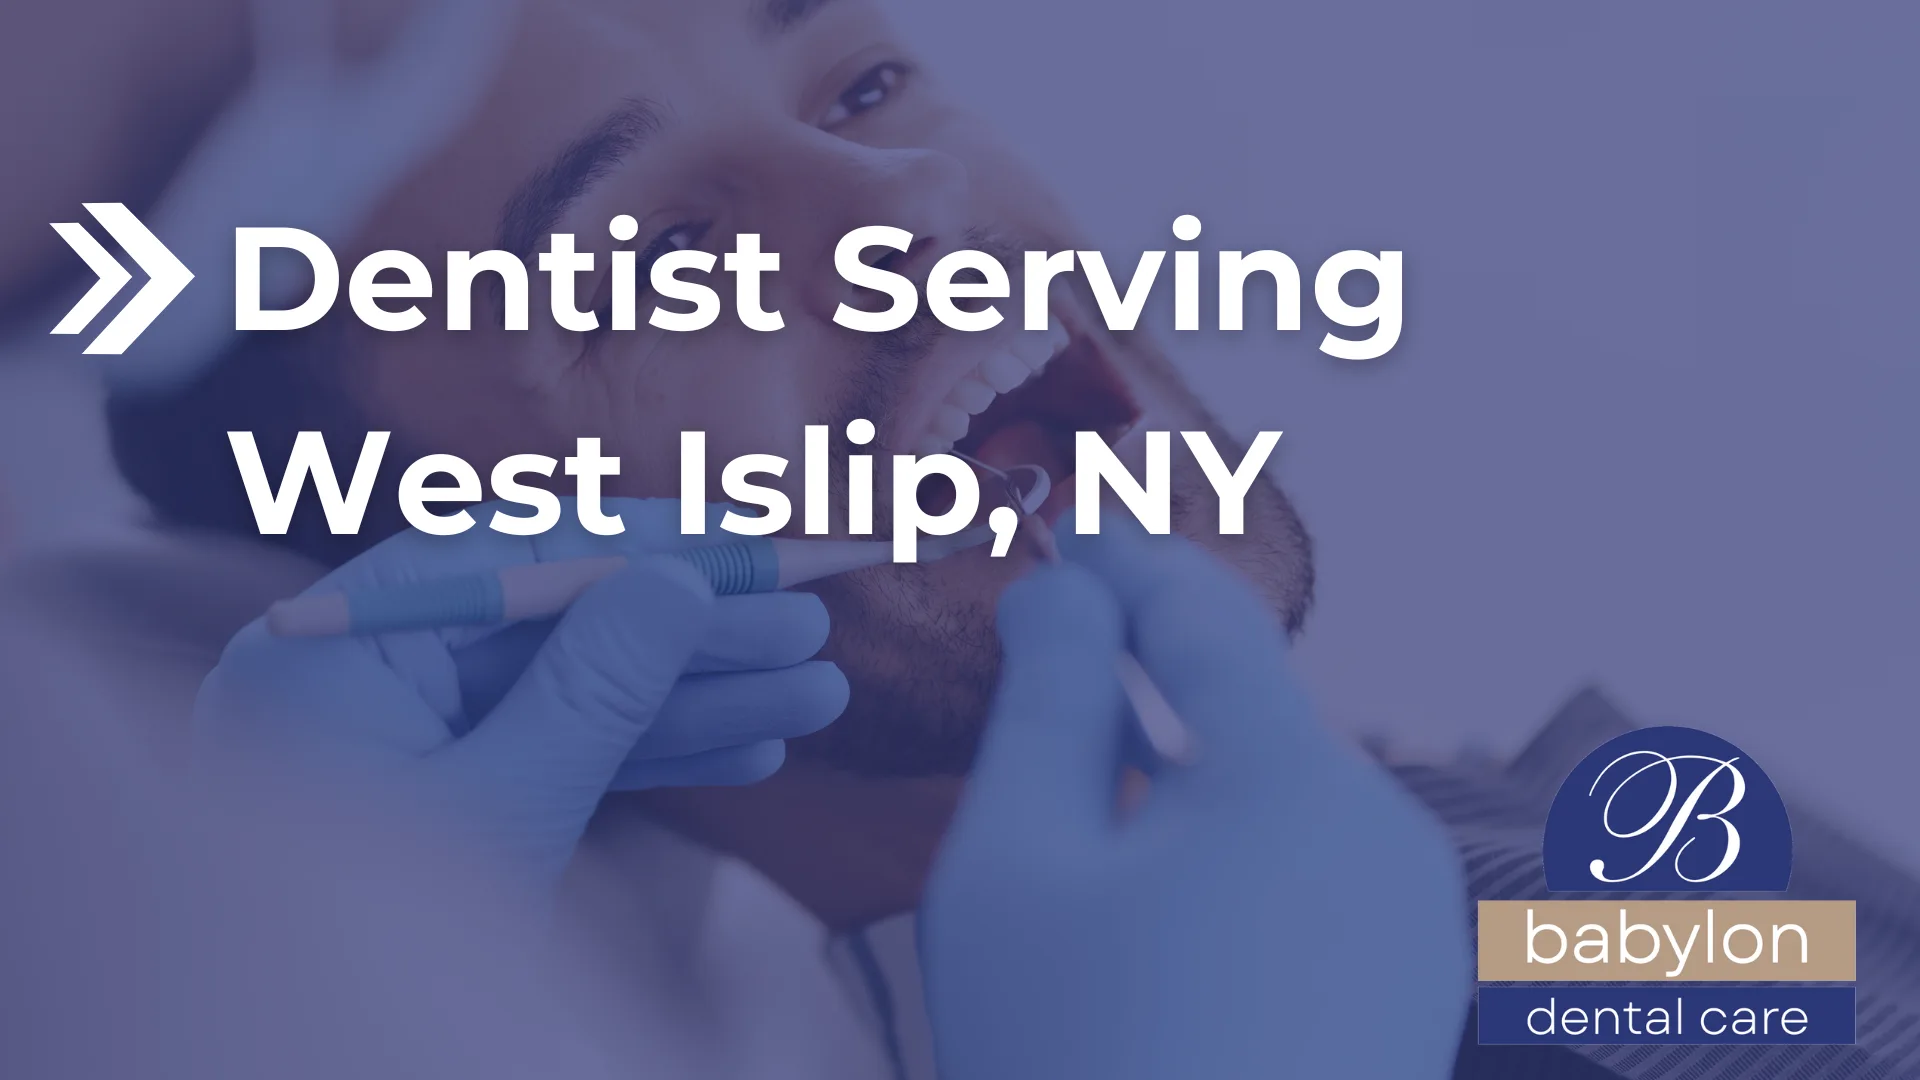 Dentist Serving West Islip, NY Image - new logo